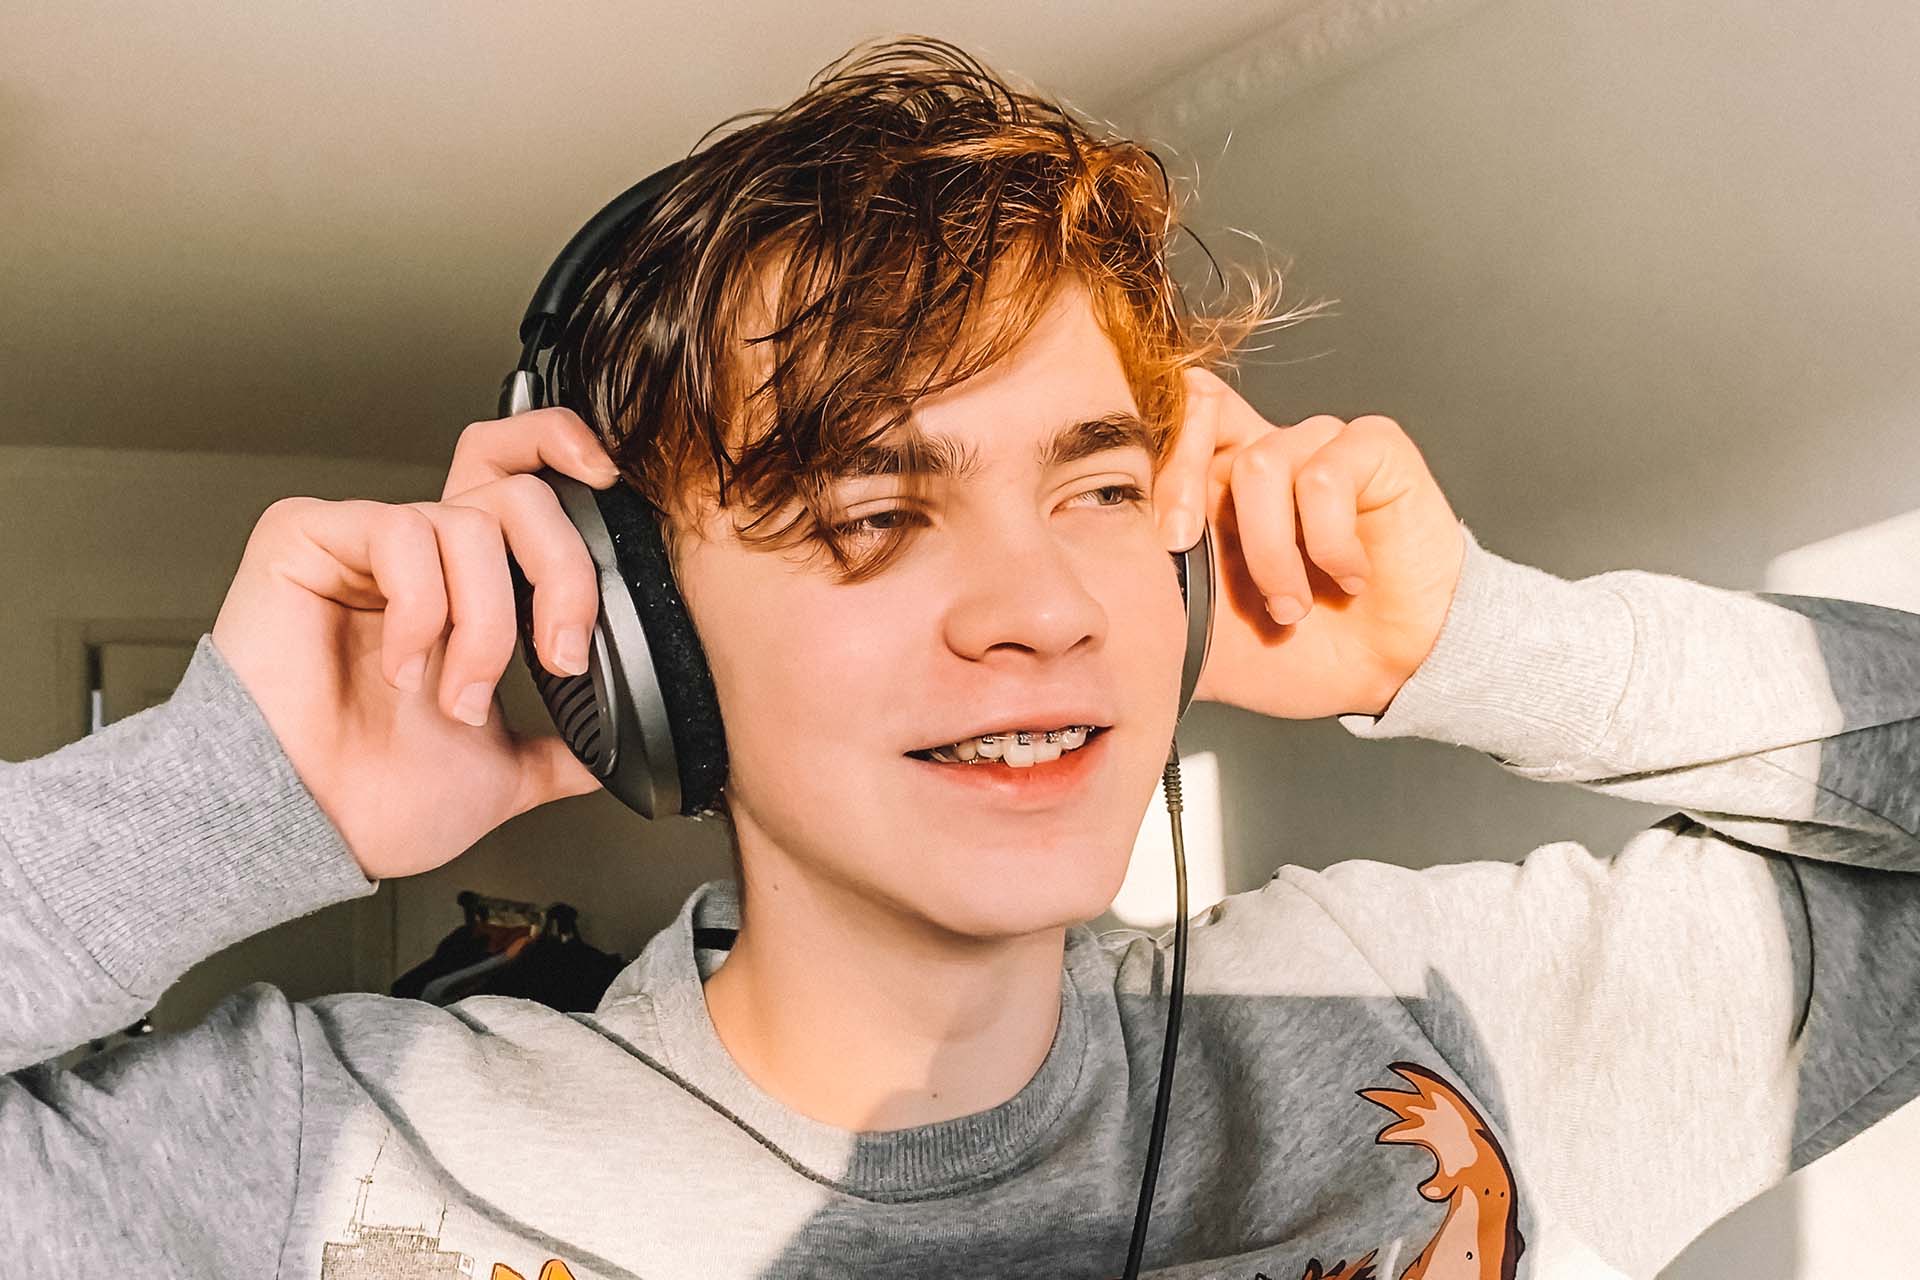 Teen boy with braces listens to music on headphones in Sherman Oaks, Los Angeles, CA